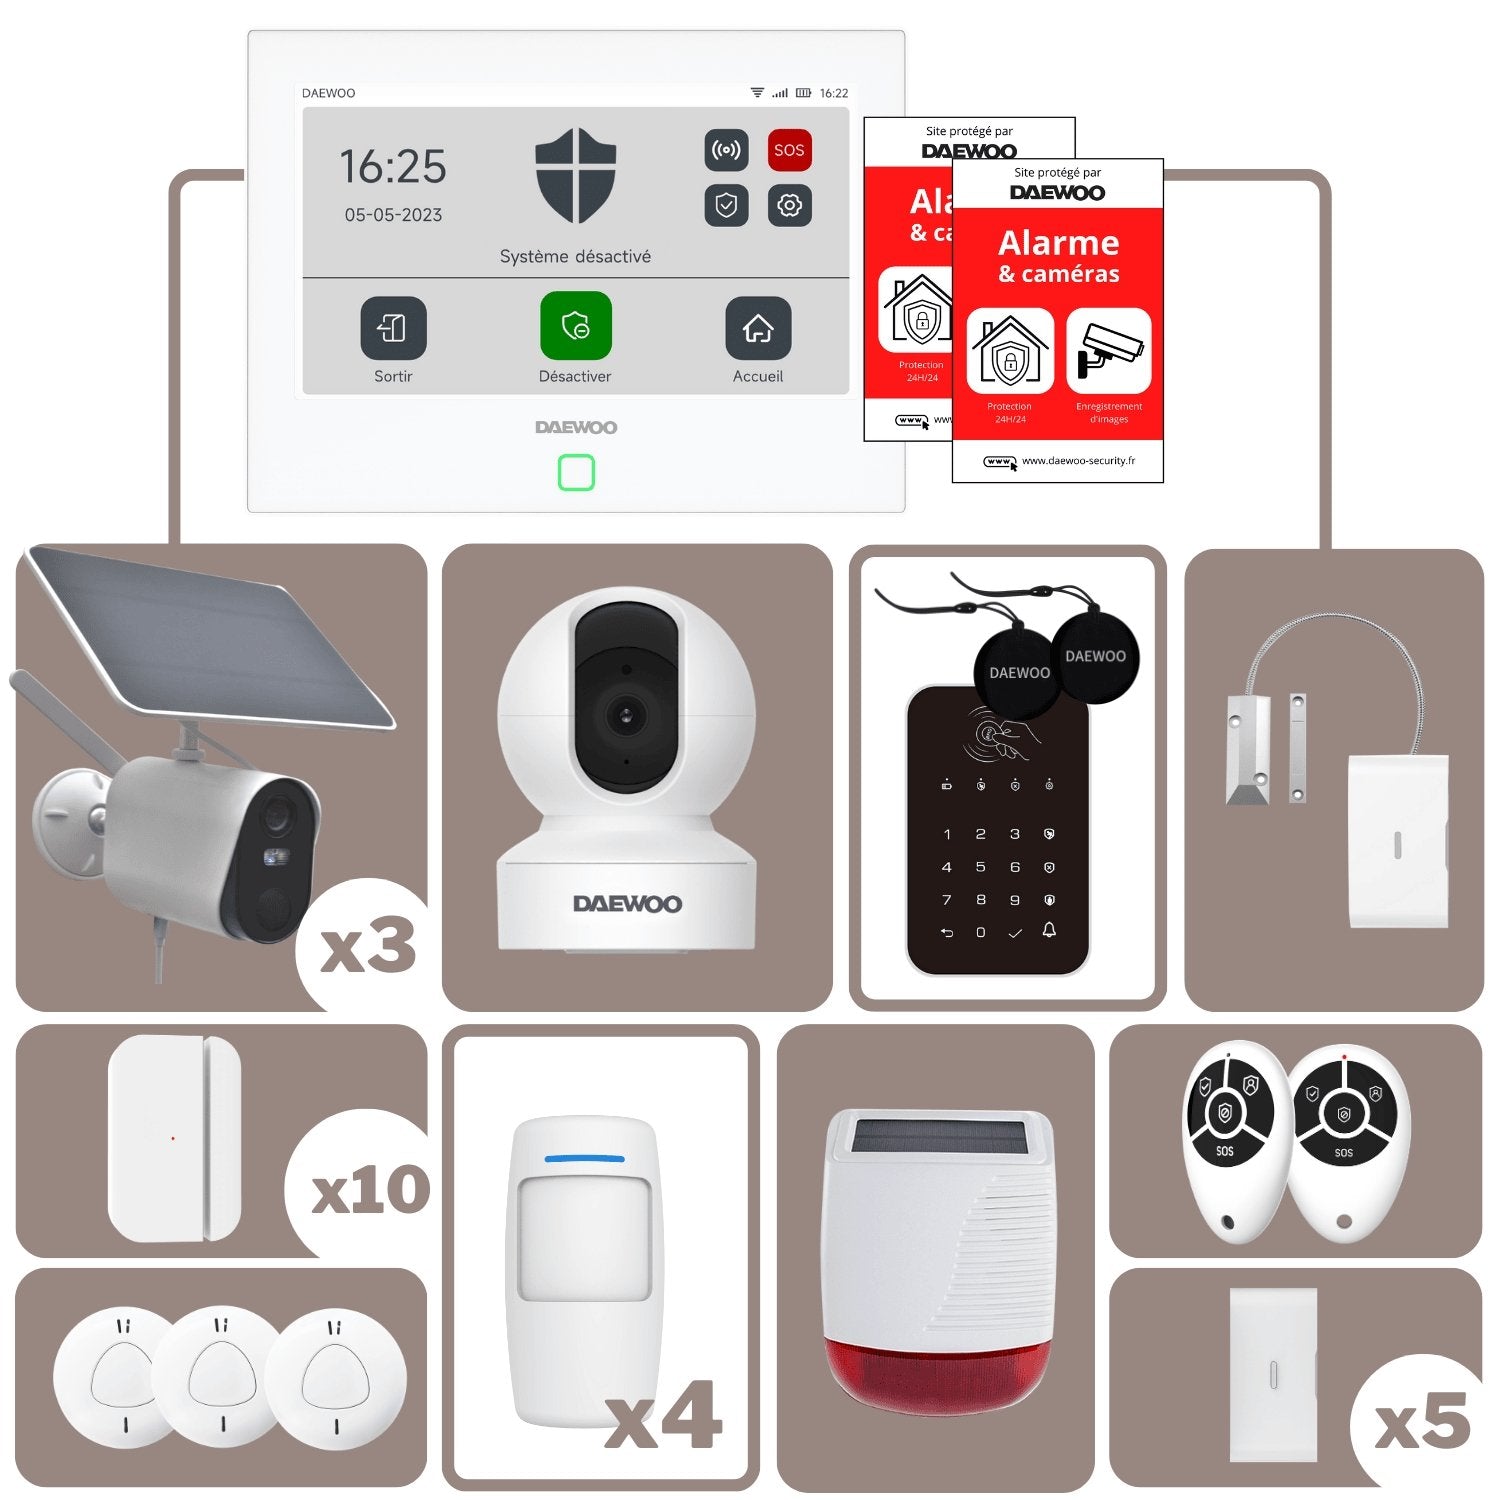 AM317 | Alarme Daewoo Wifi / GSM 4G - Daewoo Security